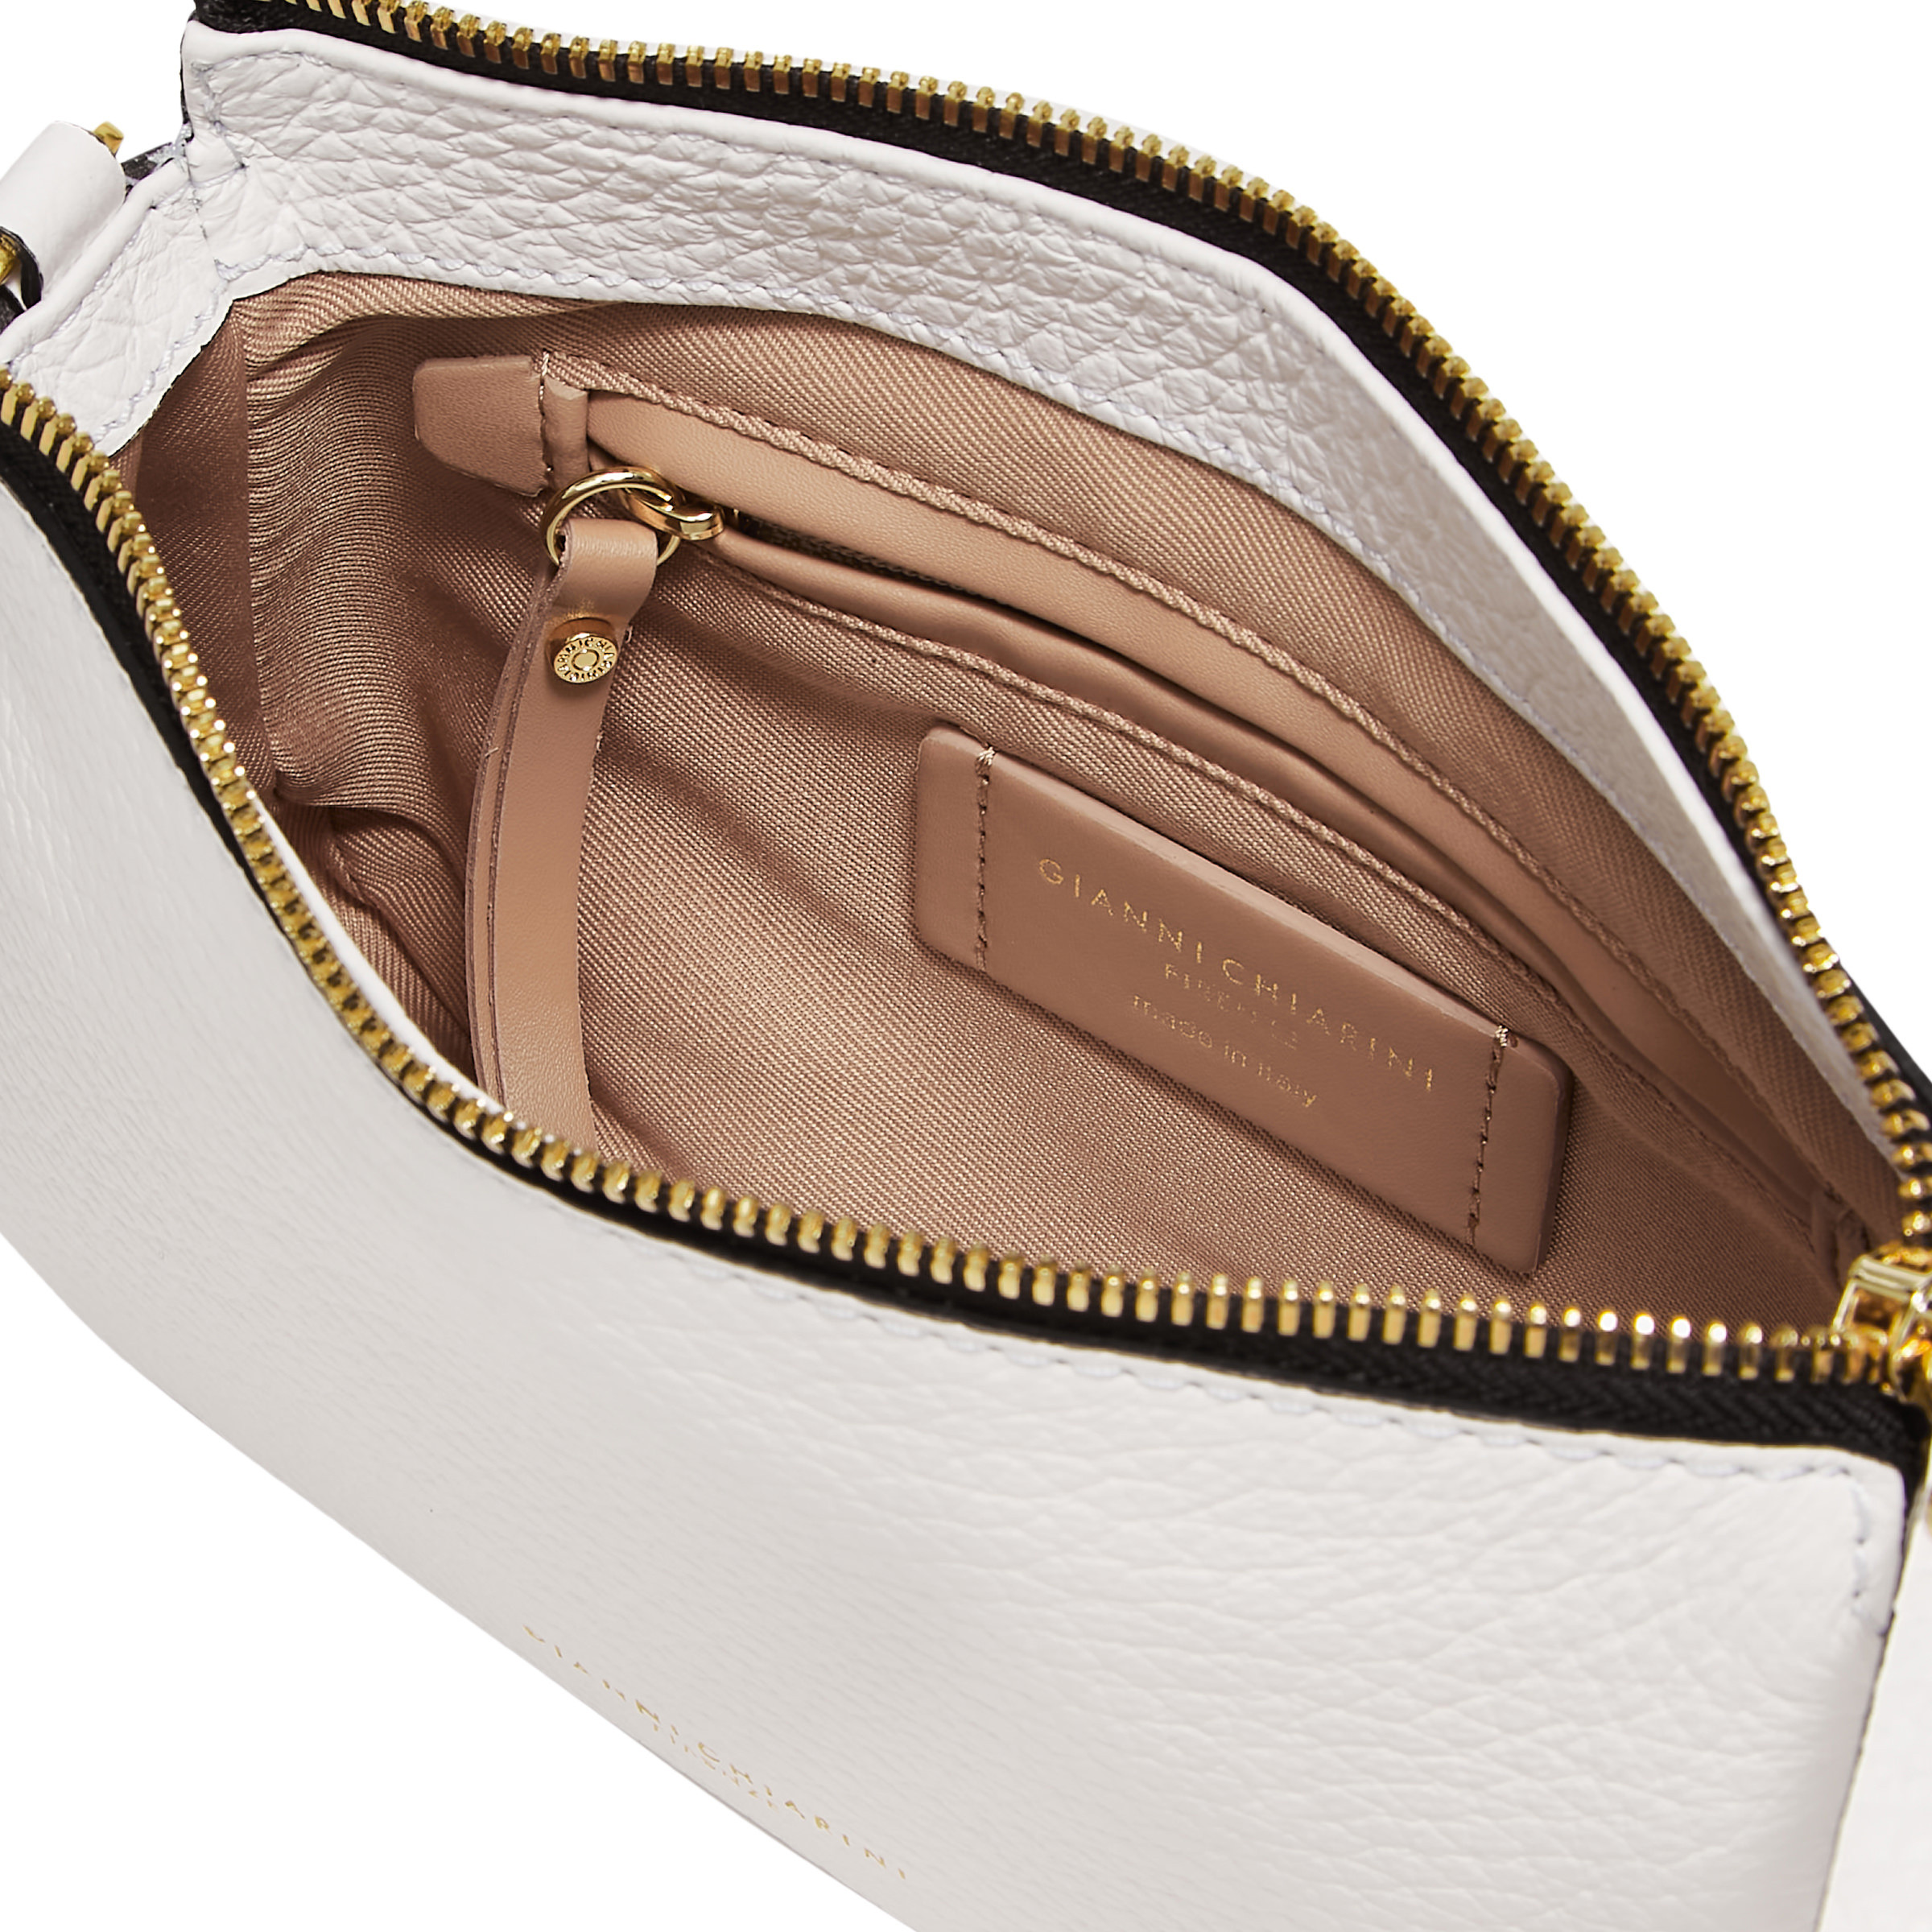 Gianni Chiarini - Brooke bag in leather, White, large image number 4